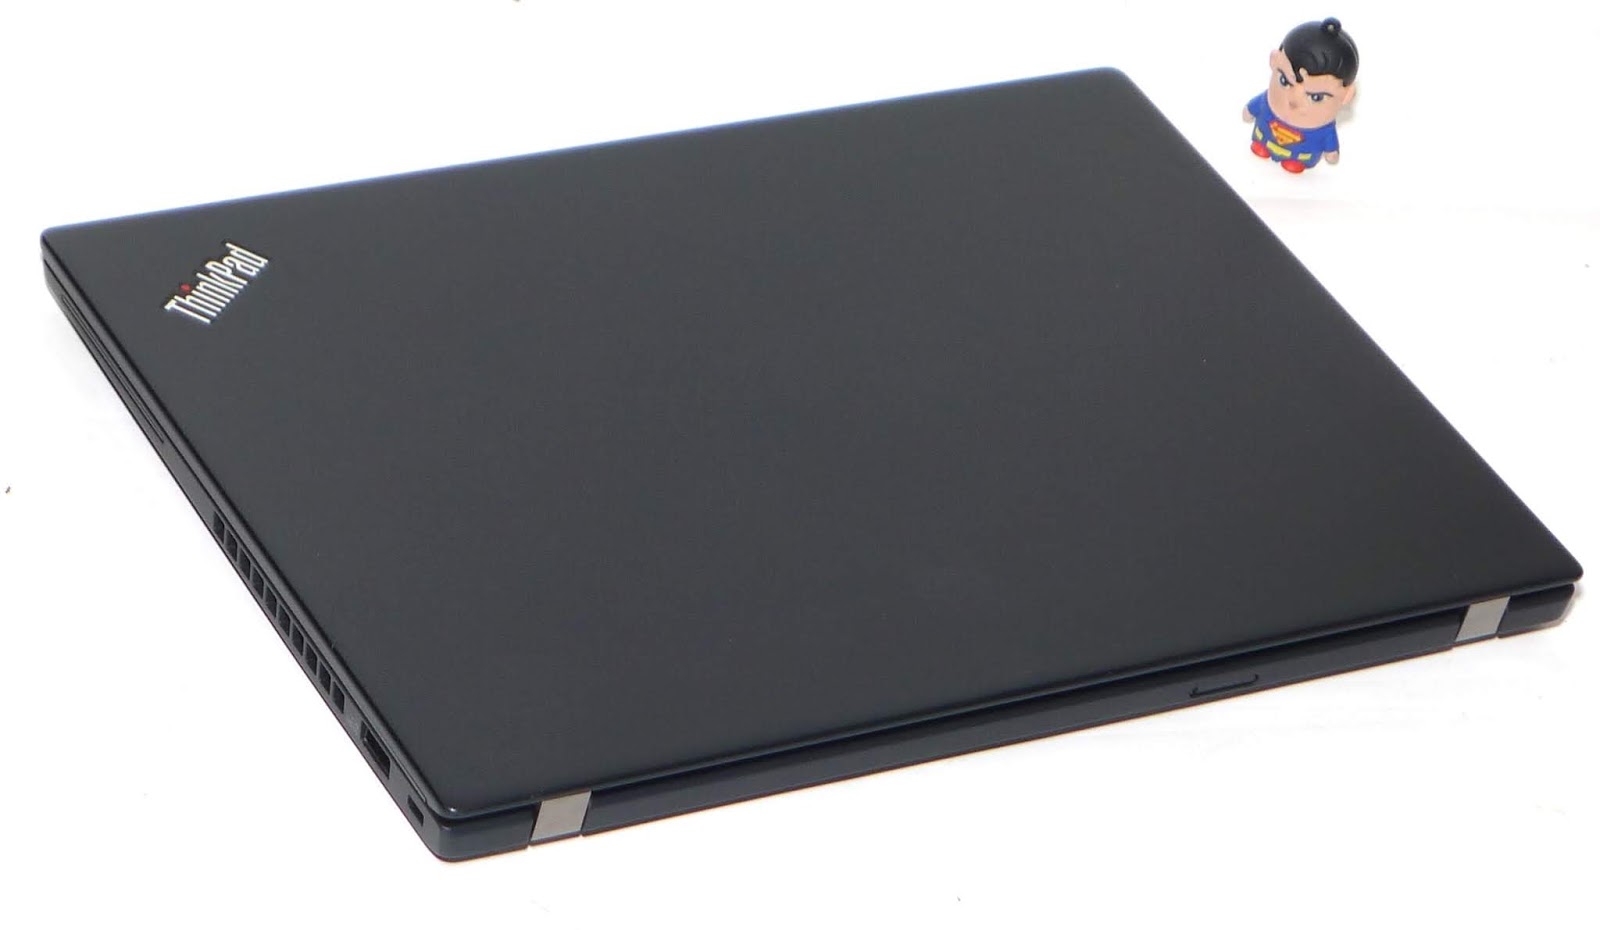 Business Laptop Lenovo ThinkPad X280 Core i5 Gen. 8 | Jual Beli Laptop